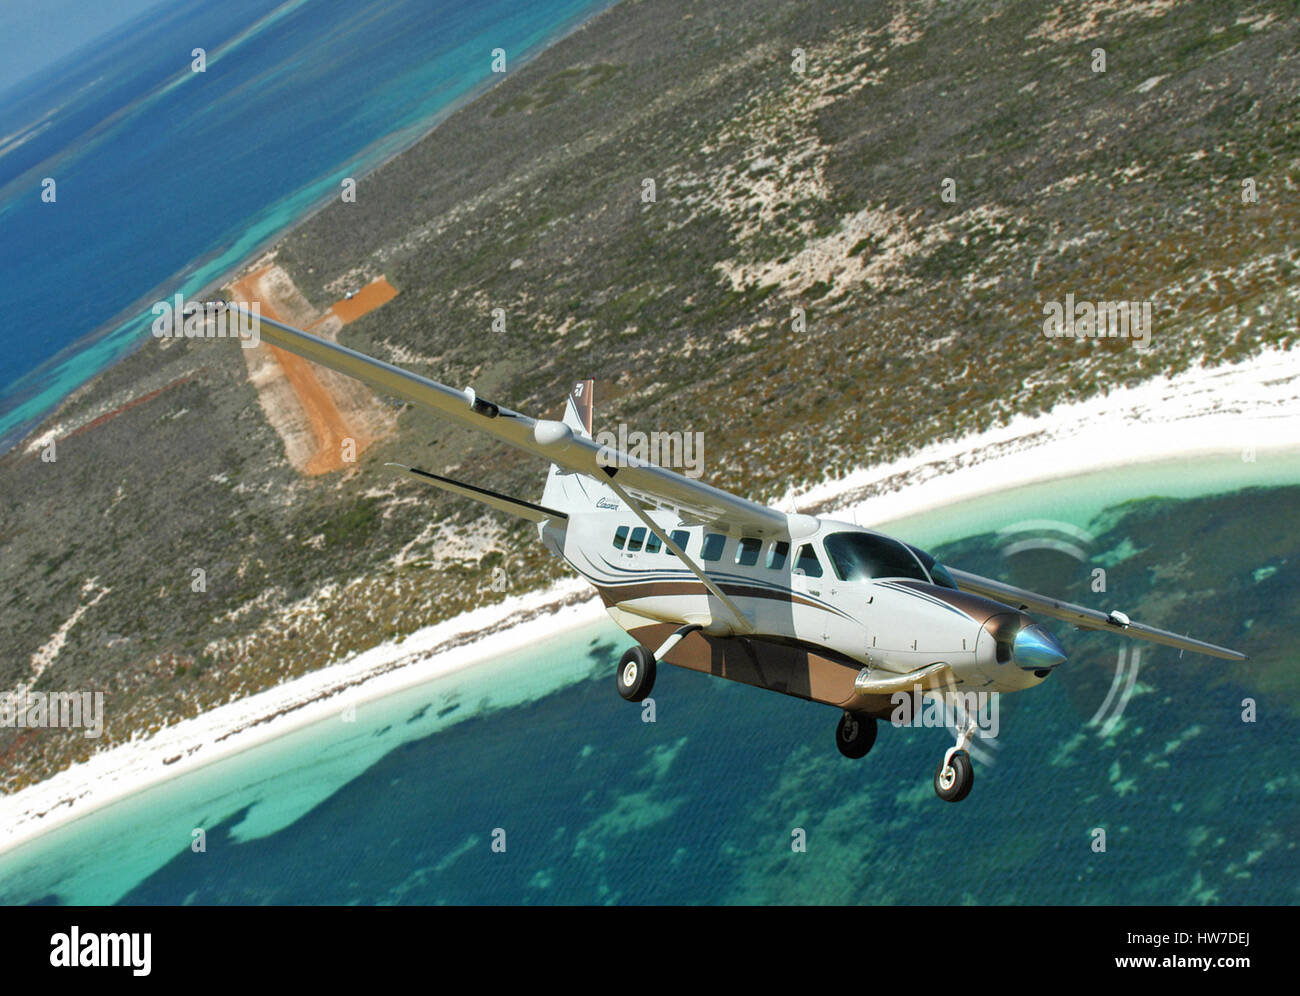 Aerial view of Cessna 208 Caravan aircraft leaving dirt airstrip on an island Stock Photo